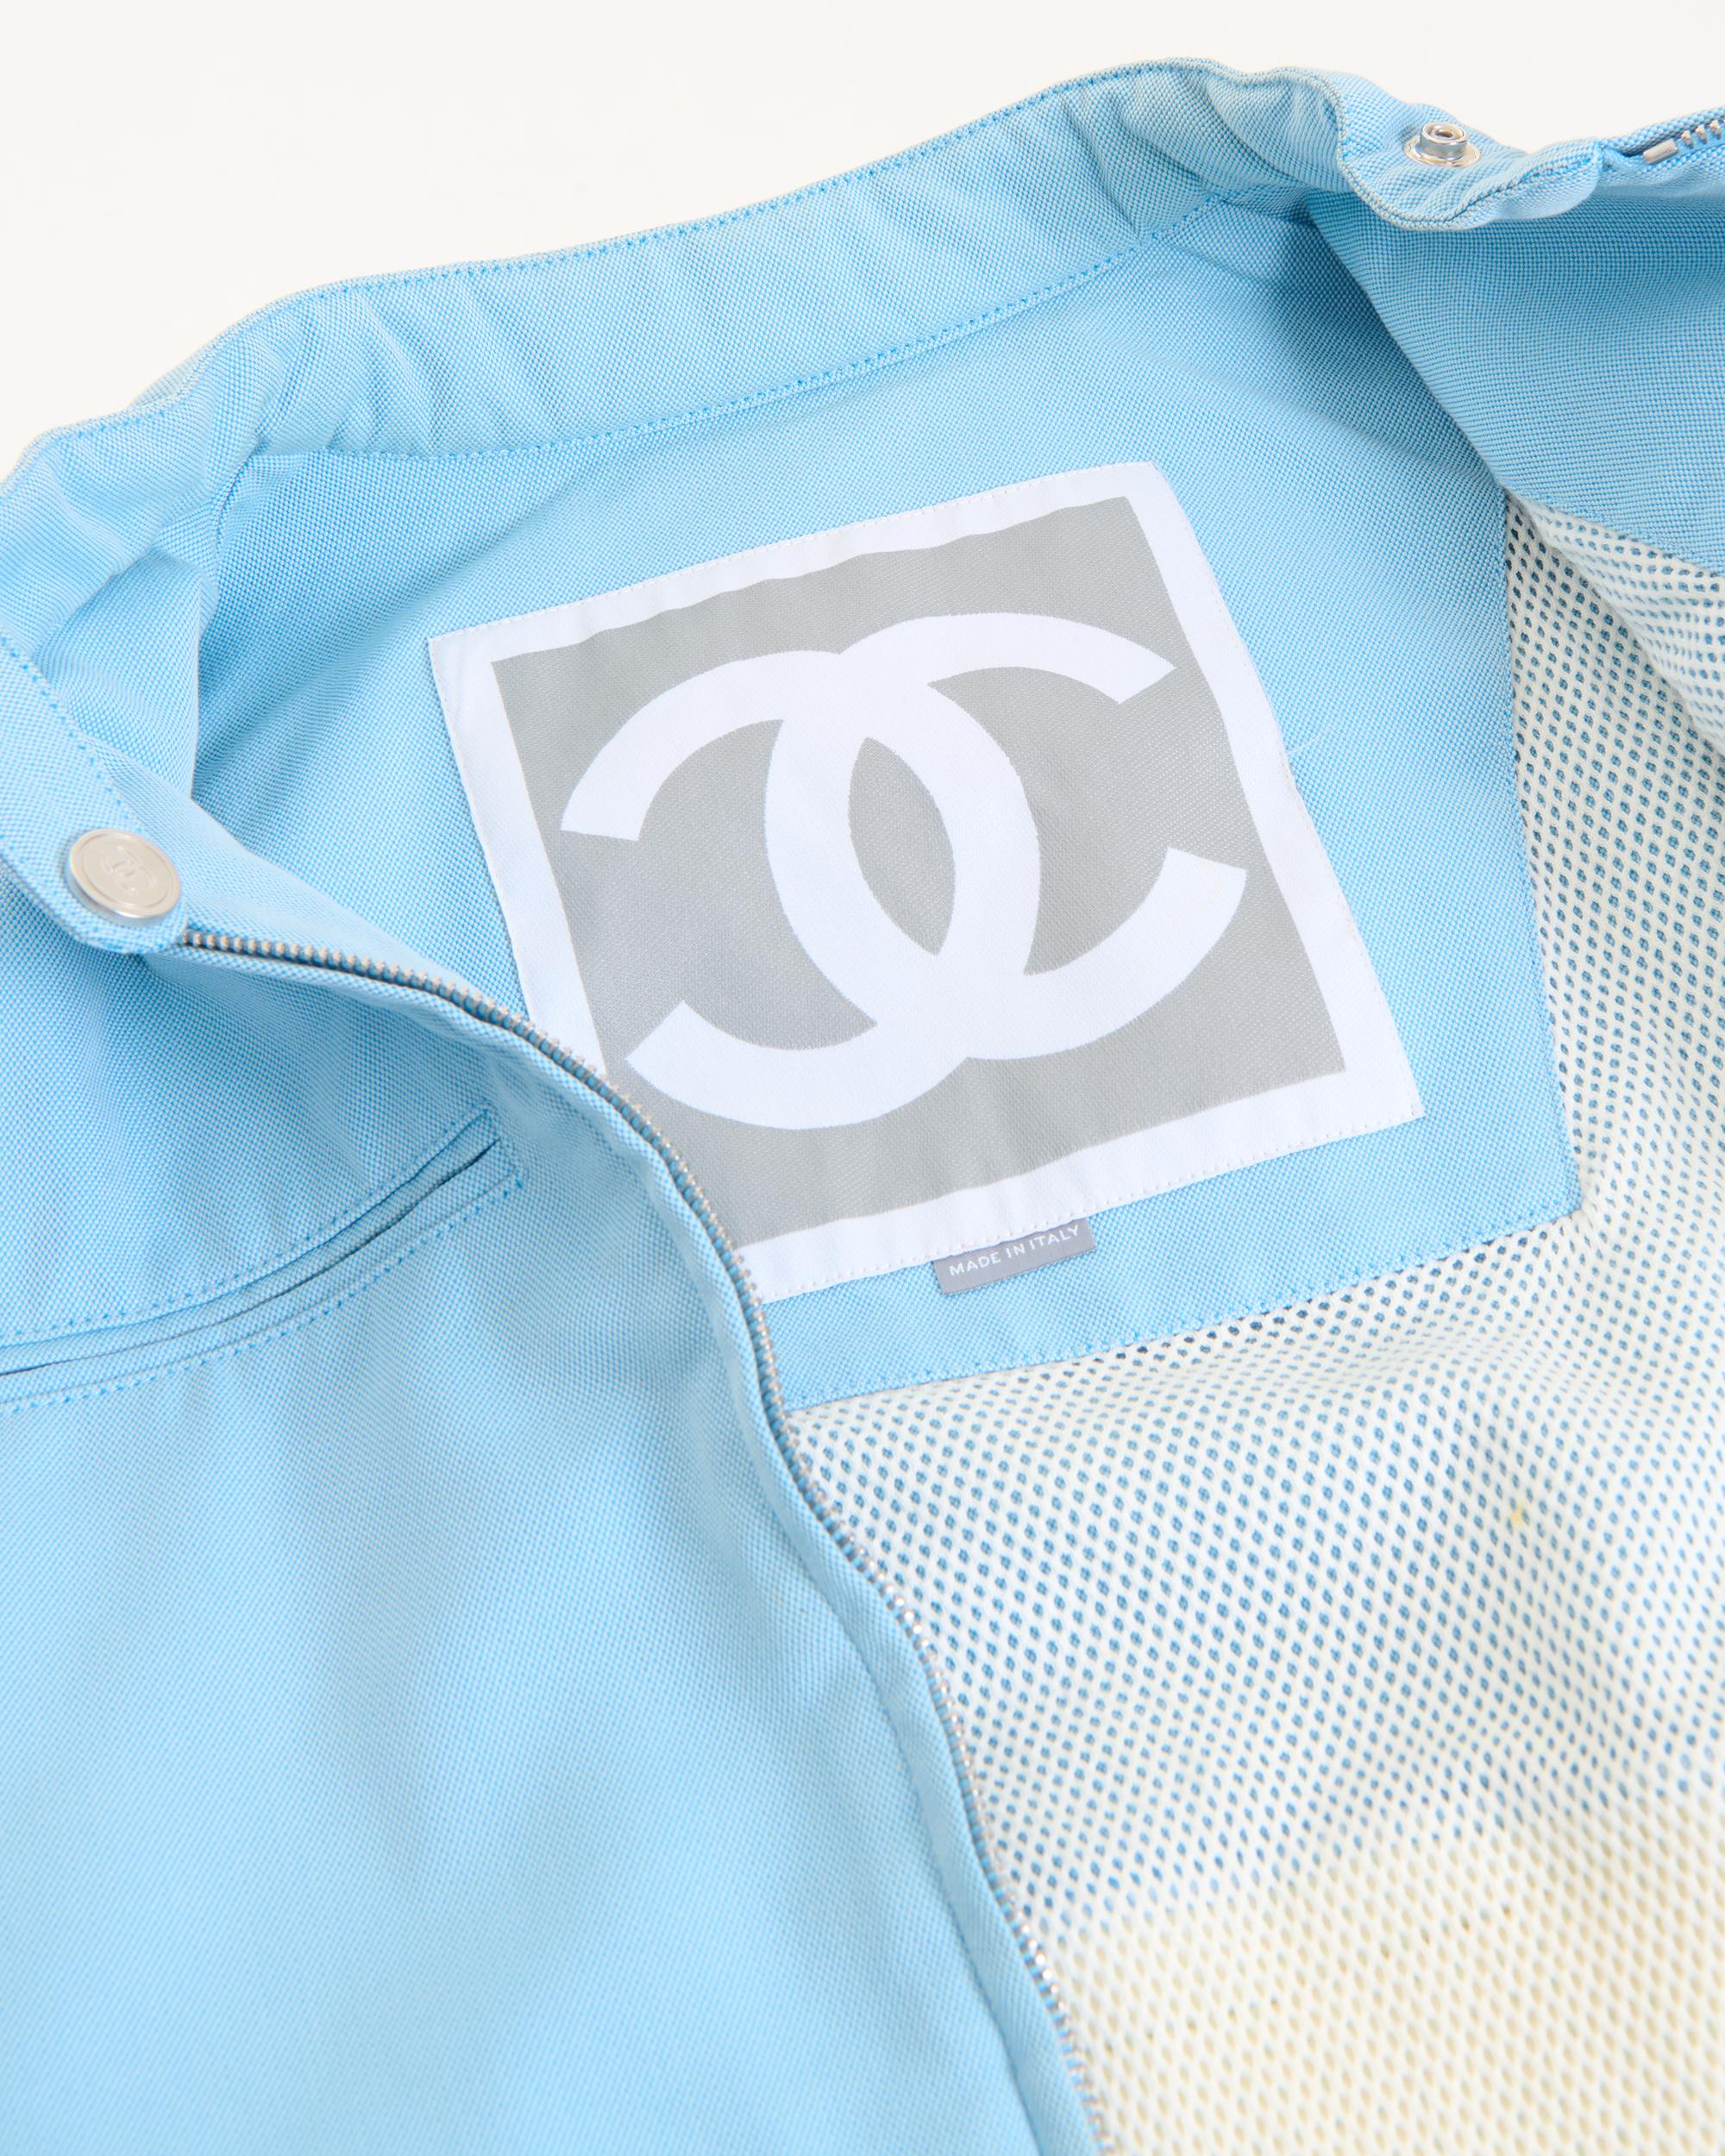 Chanel by Karl Lagerfeld S/S 2002 light blue motorcycle logo vest  8